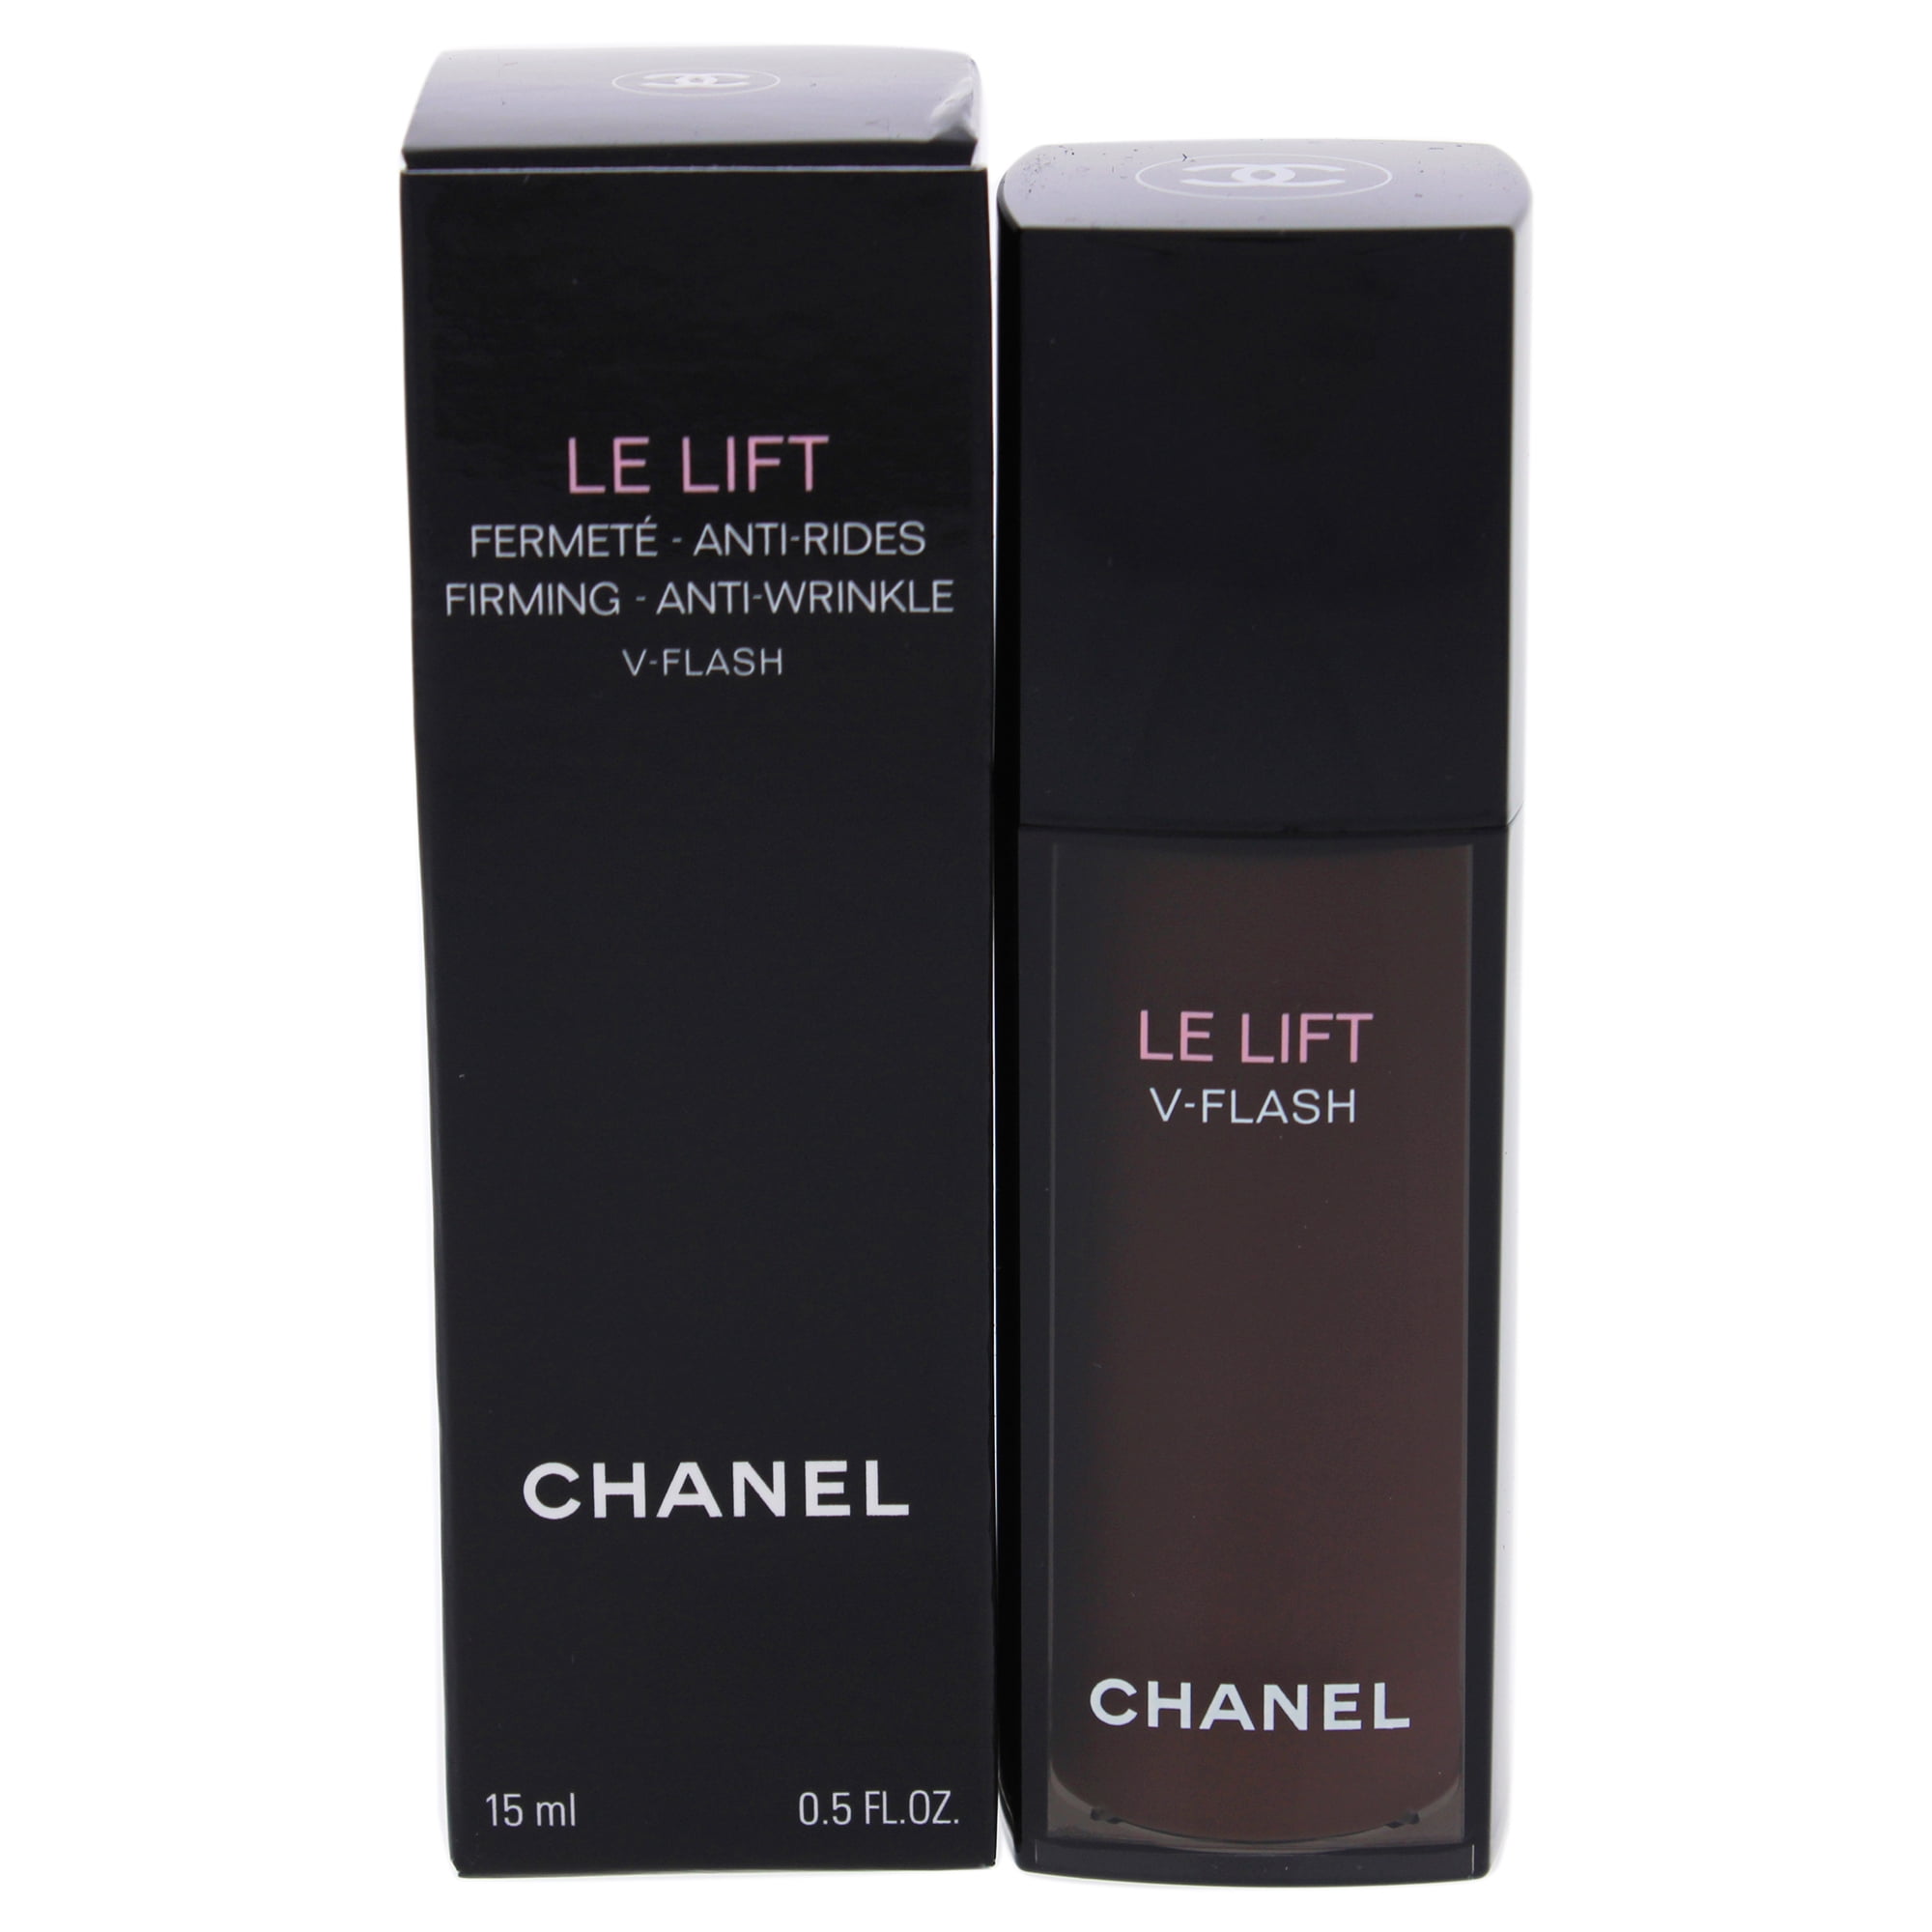 Le Lift V-Flash Firming - Anti Wrinkle Serum by Chanel for Unisex  oz  Serum | Walmart Canada